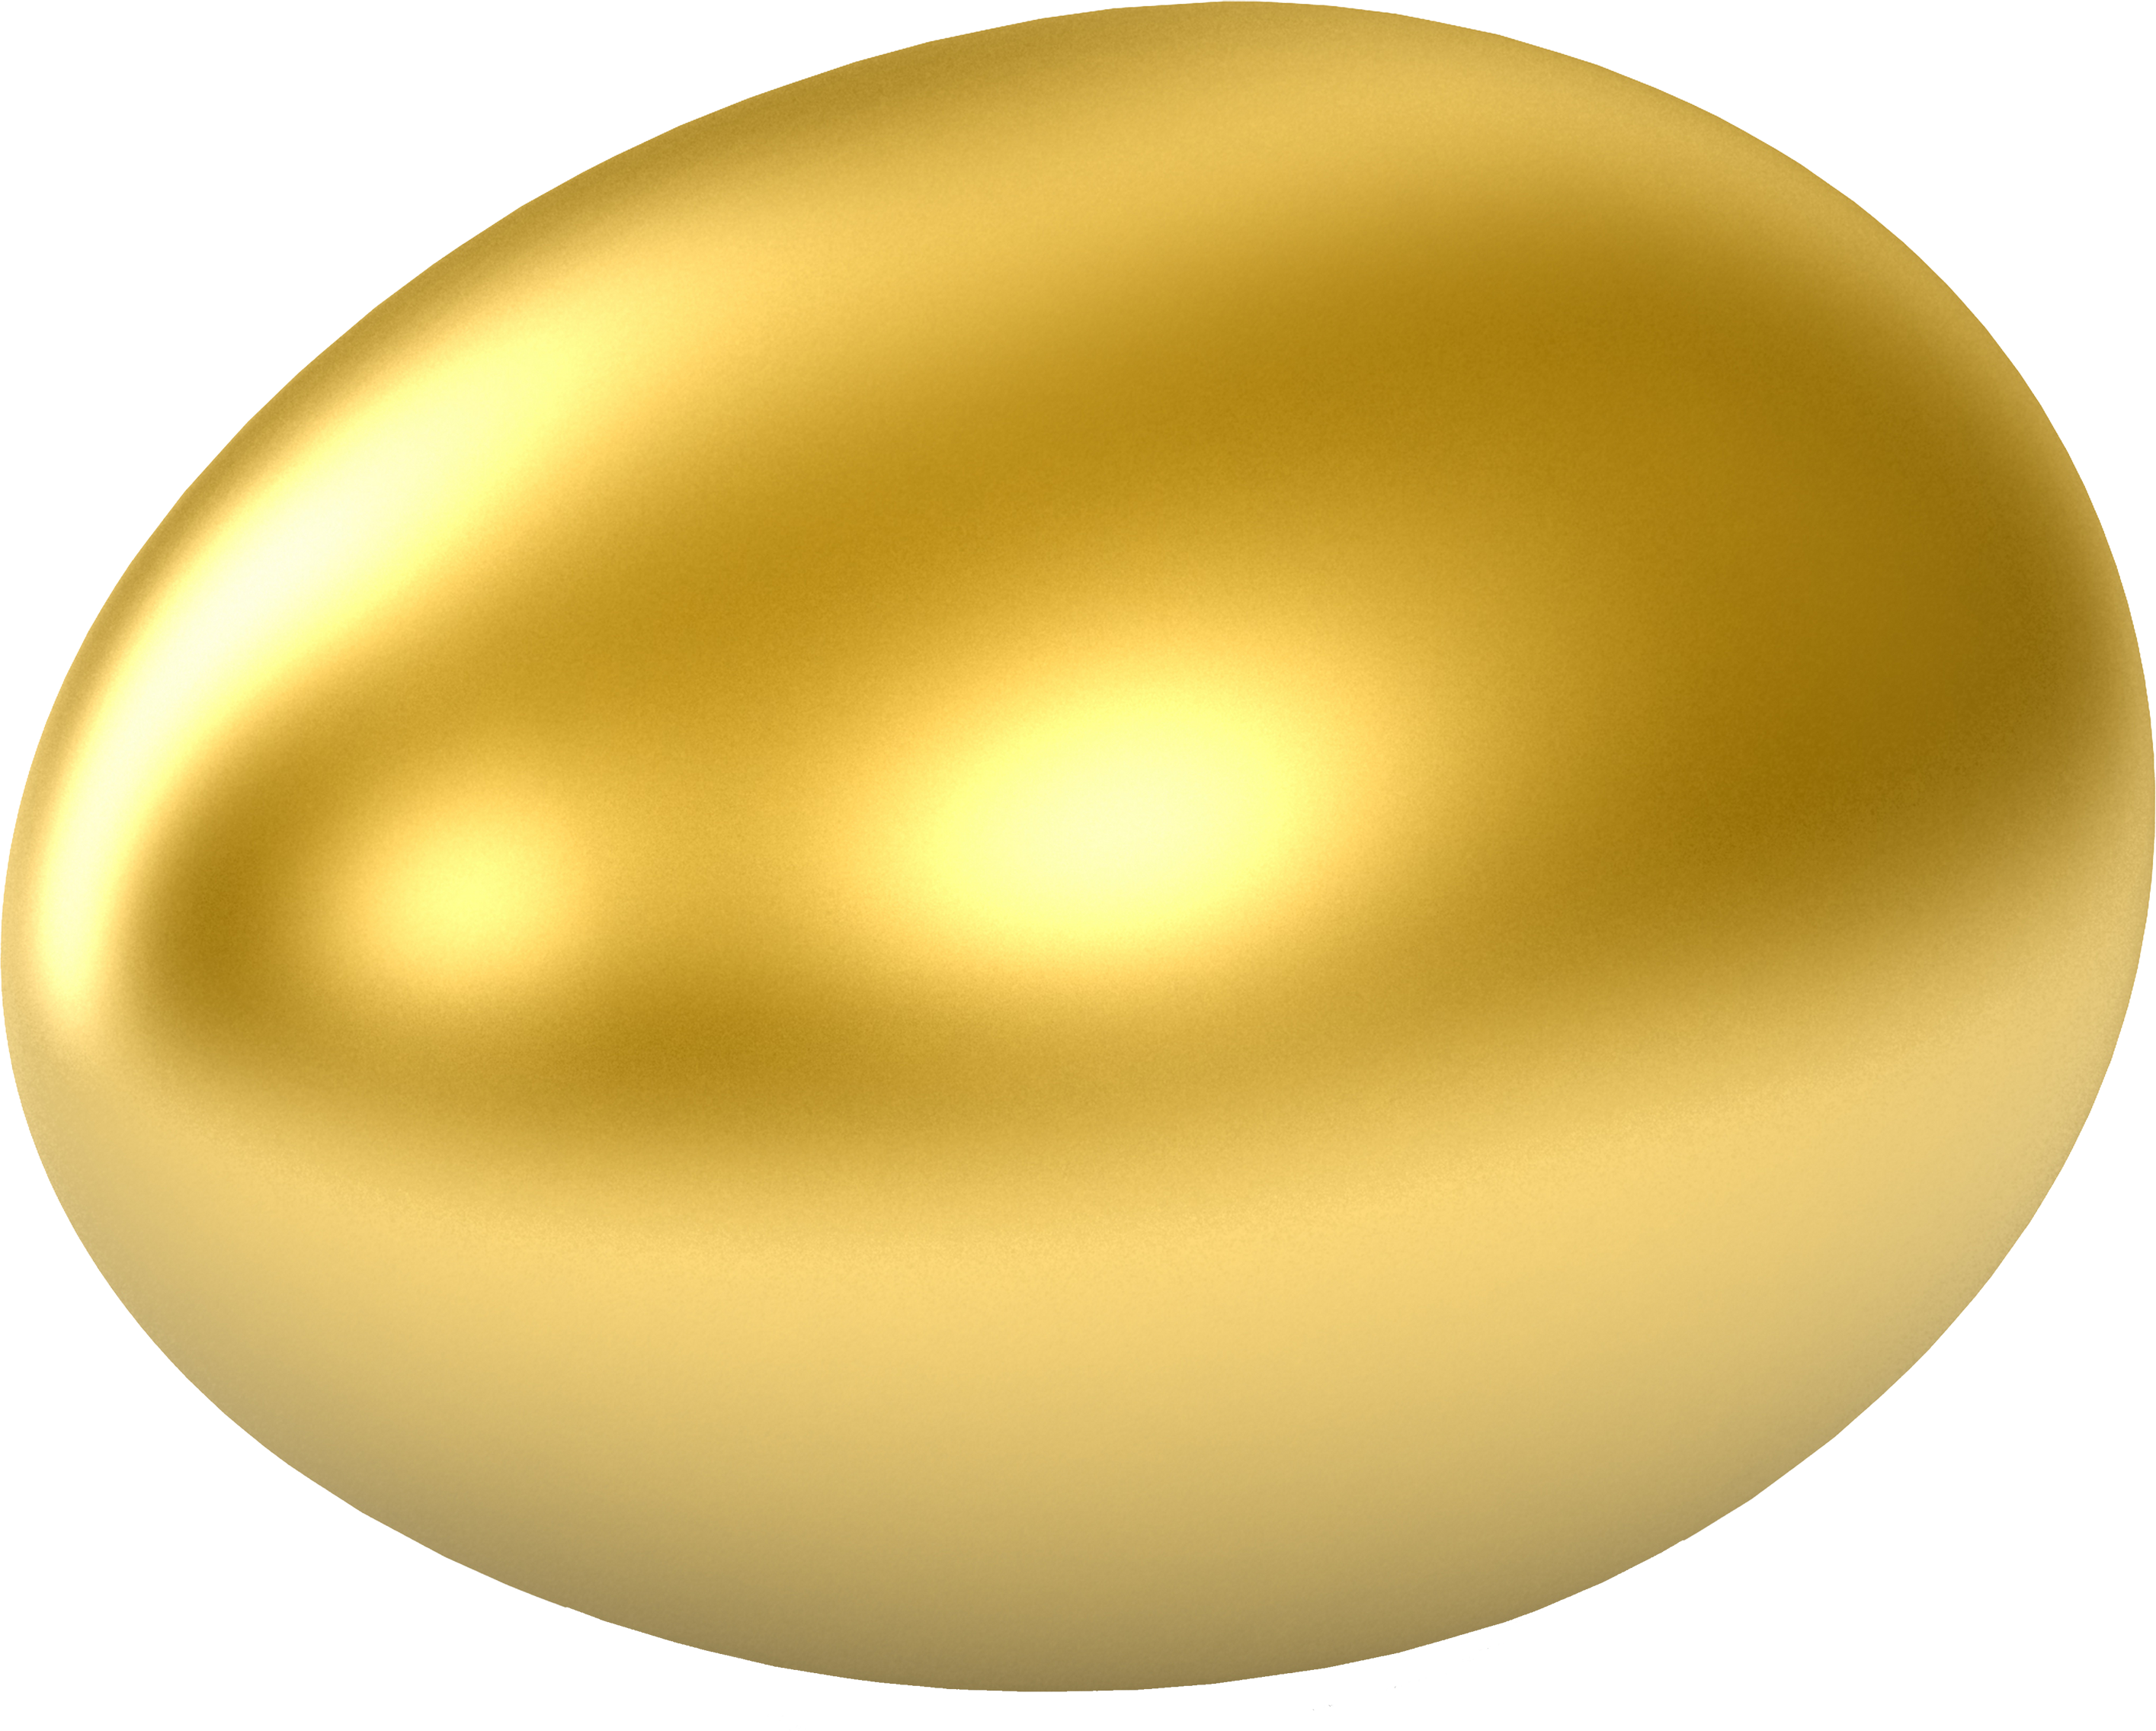 Egg PNG Transparent Images | PNG All